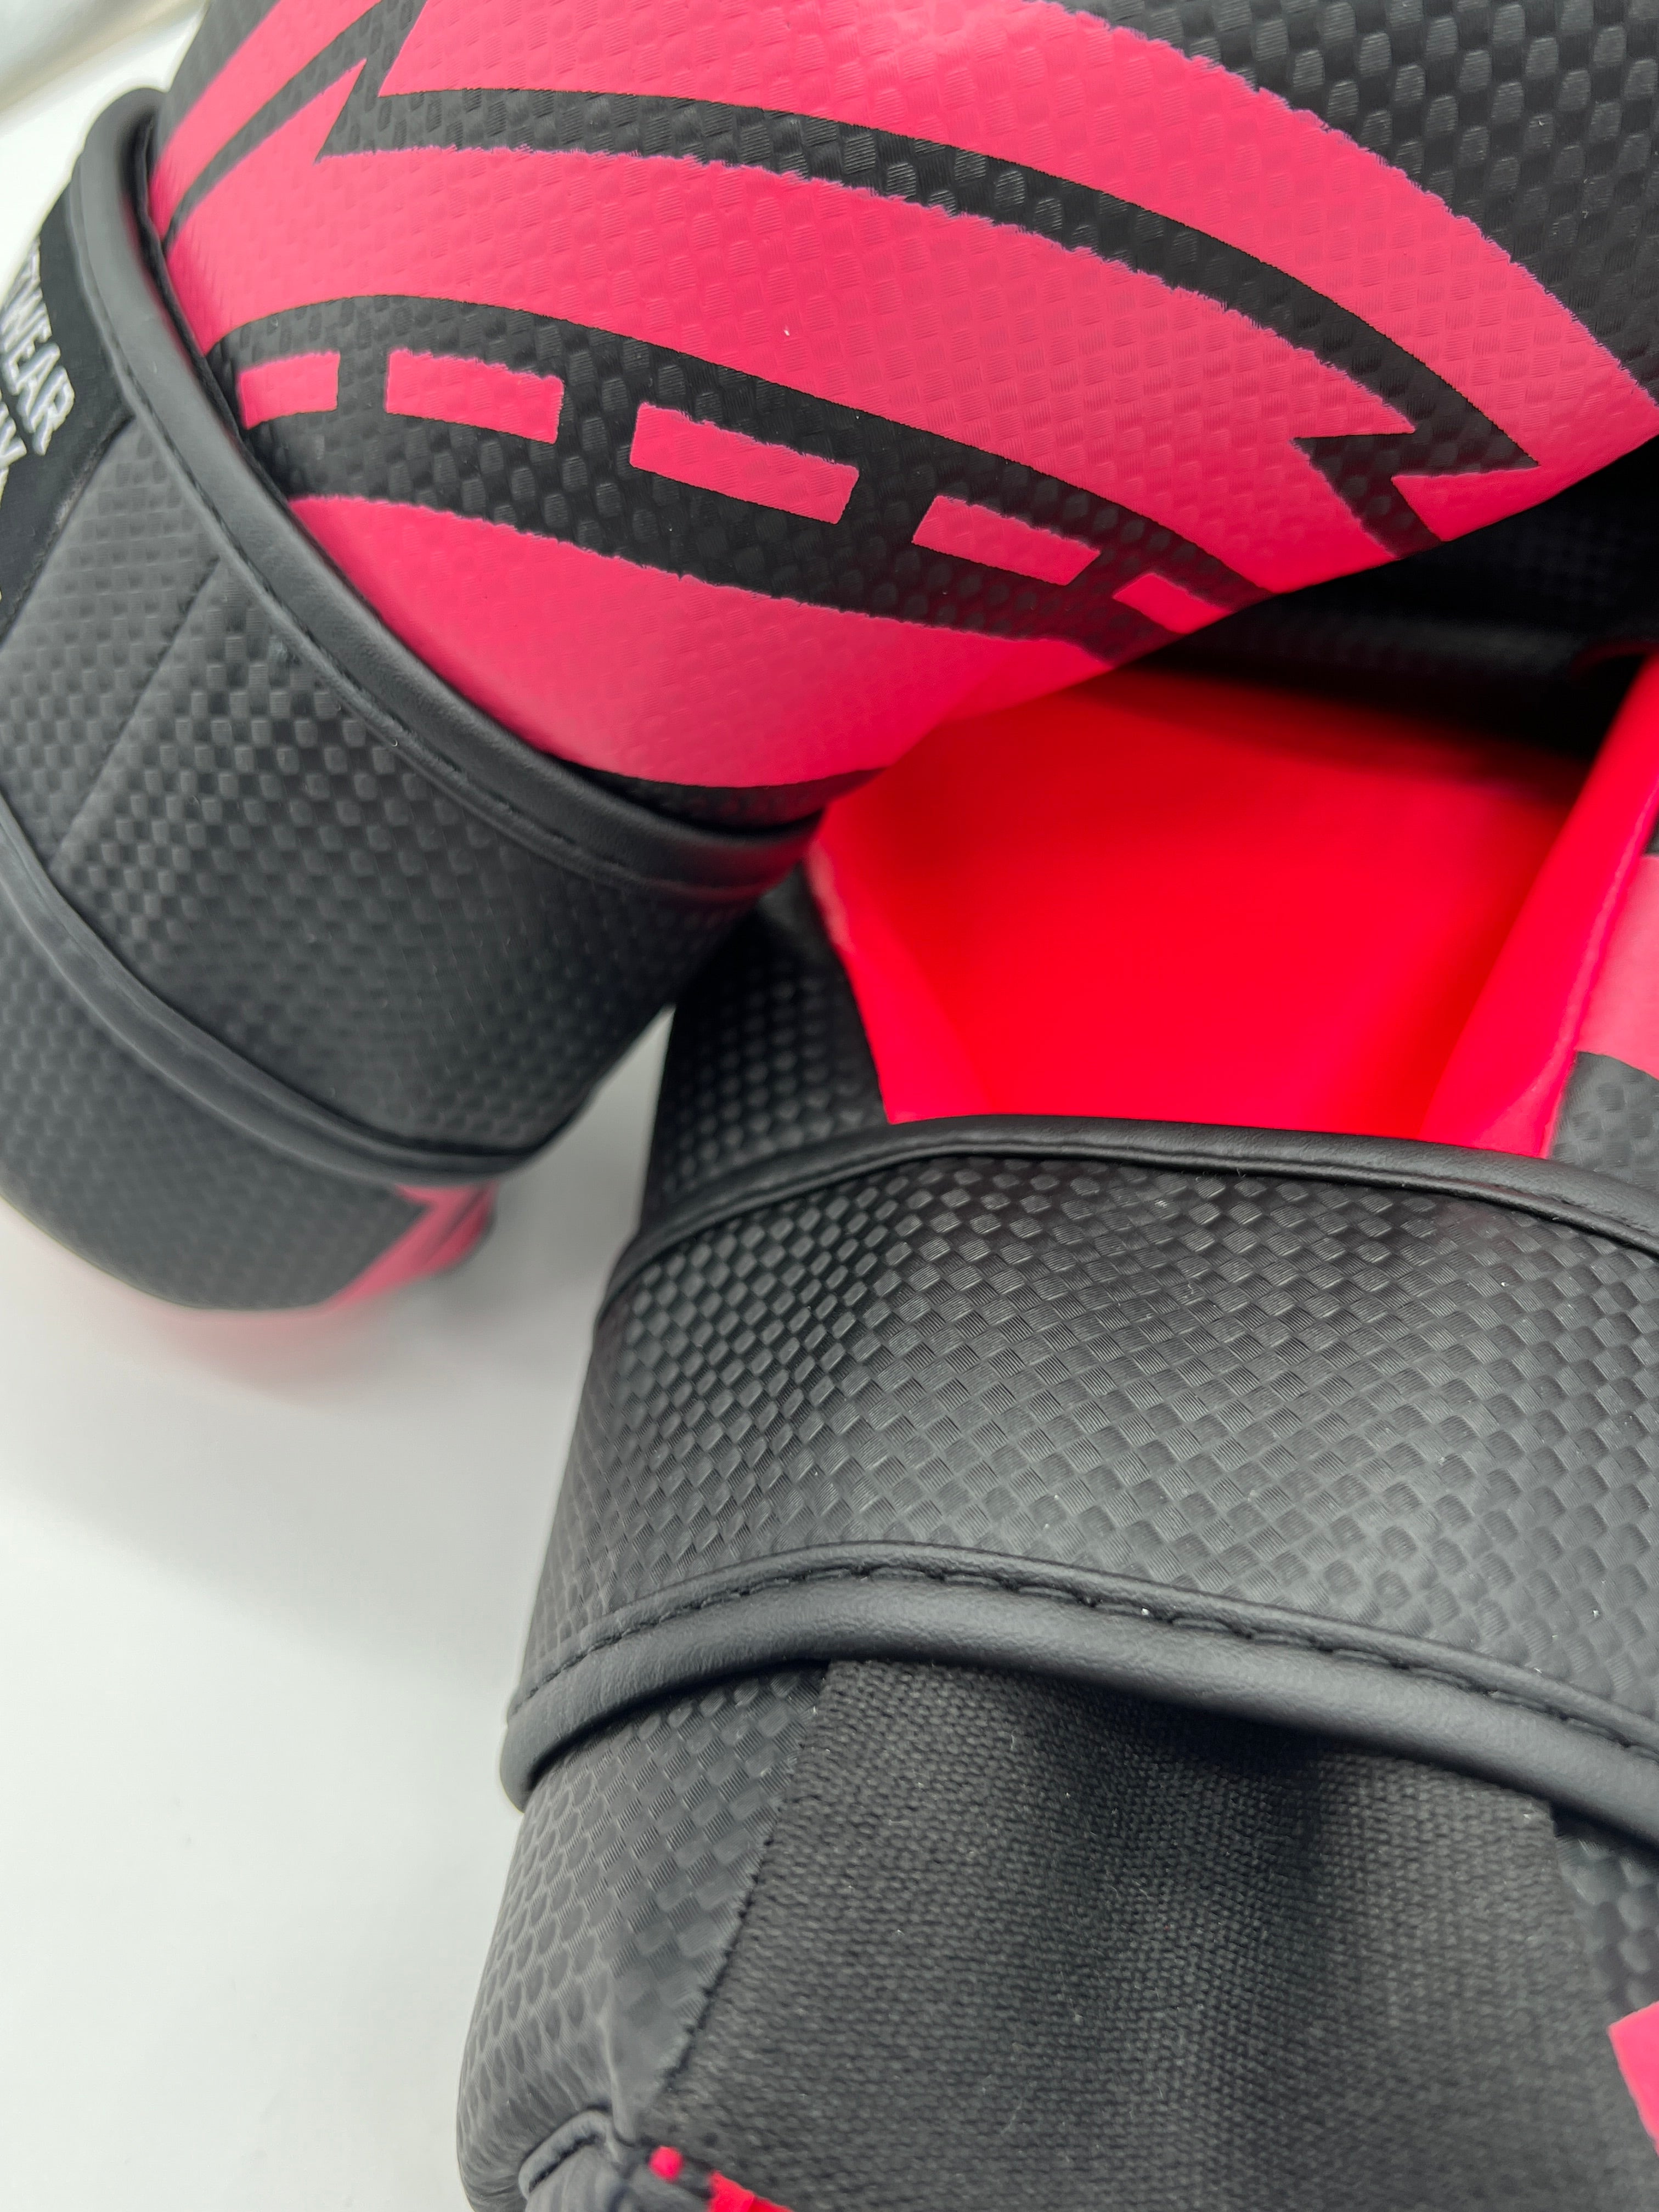 PRO-X Points Gloves - Carbon Black/Pink